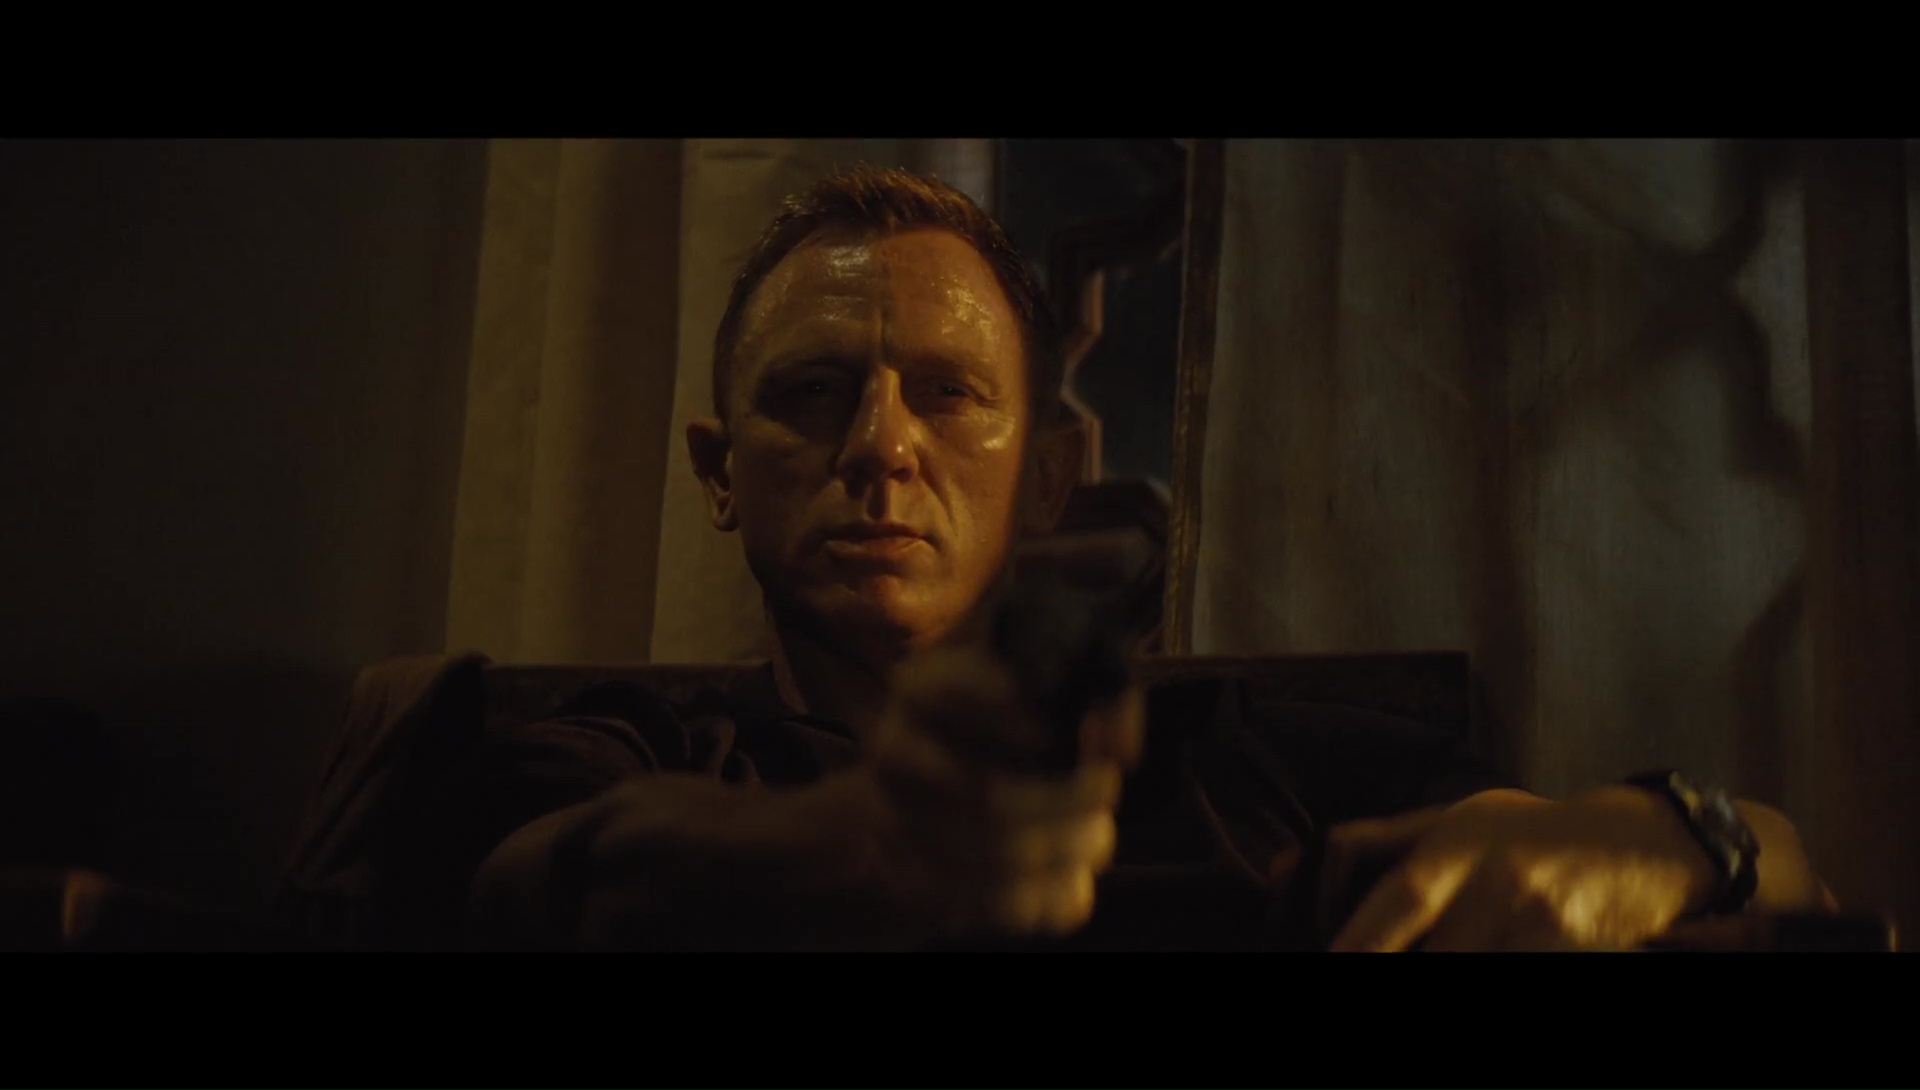 007 Spectre 1080p Lat-Cast-Ing 5.1 (2015) DzlVlHAv_o